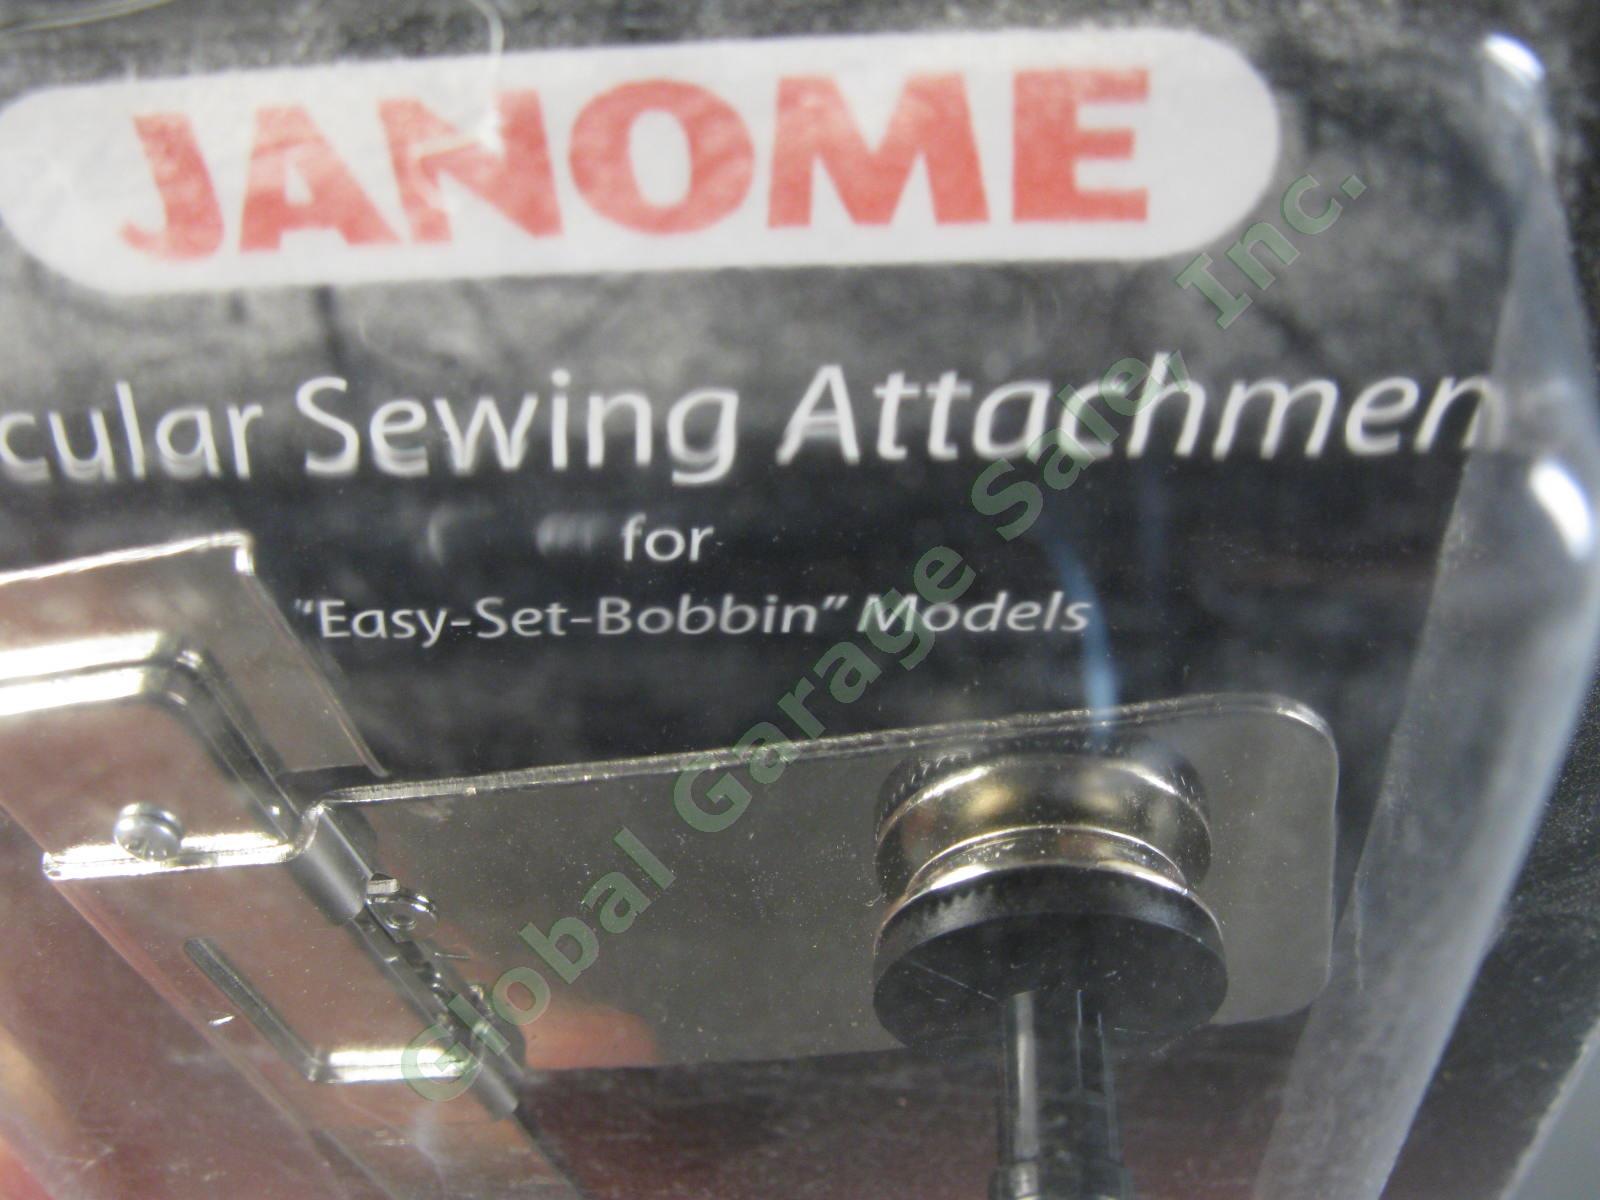 Janome Circular Sewing Attachment 202-135-007 Fits Easy Set Bobbin Model MC15000 1